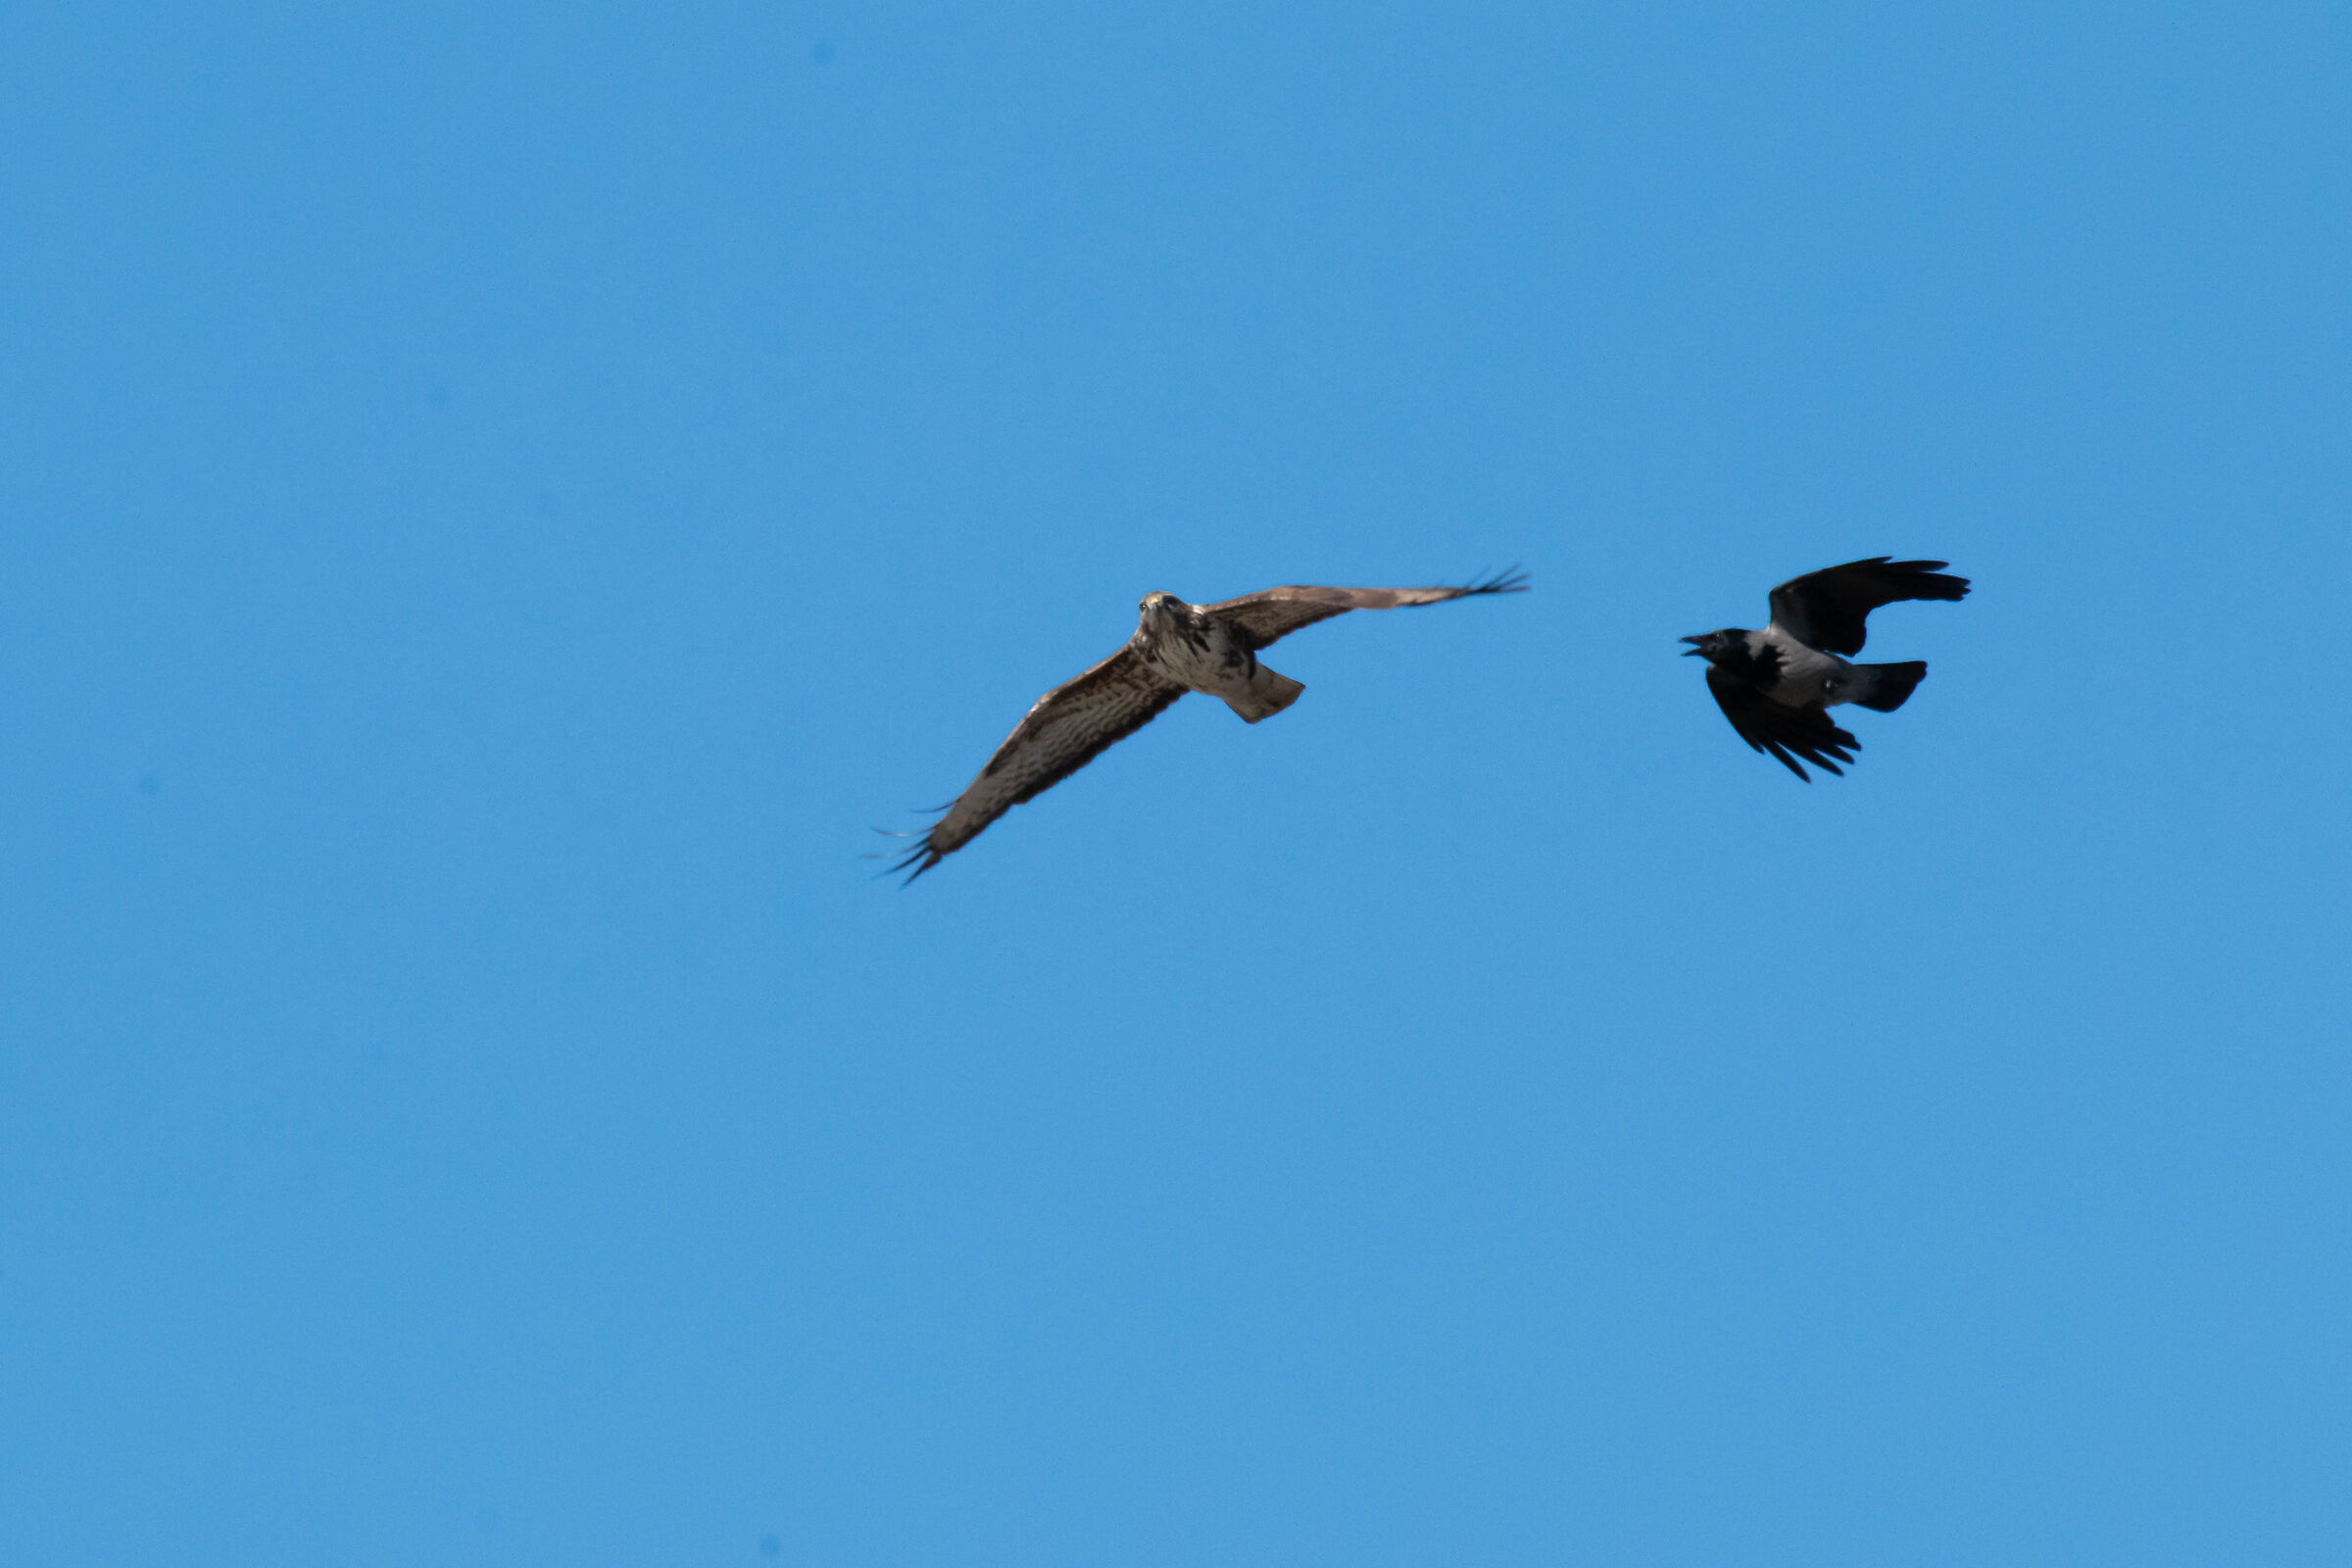 Buzzard and gray crow...